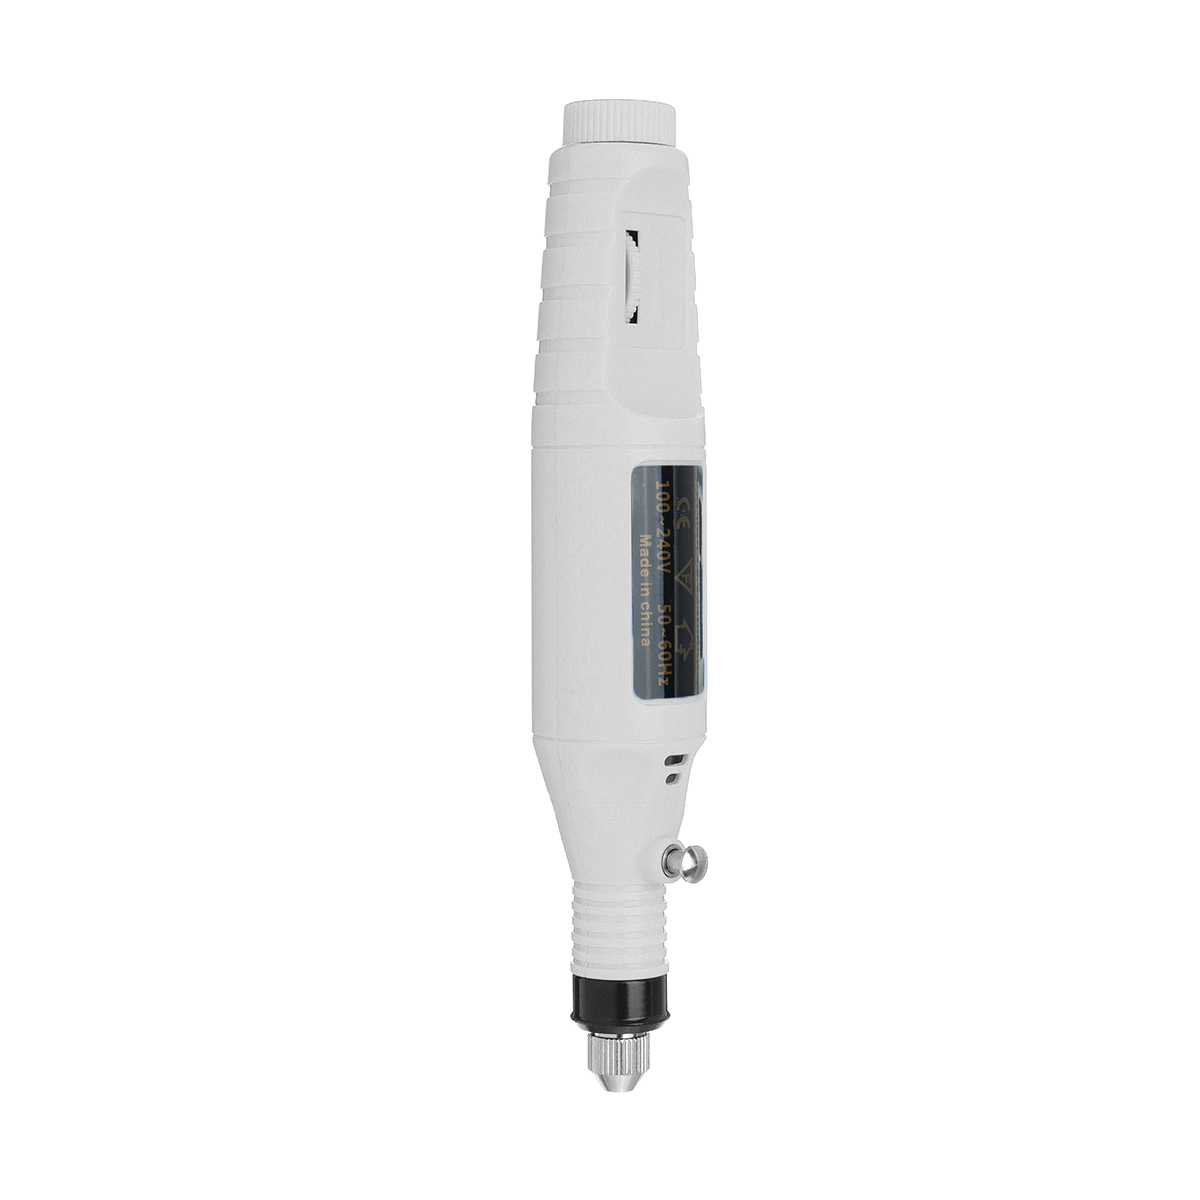 Professional-Acrylic-Electric-Engraving-Pen-Nail-Art-Drill-File-Manicure-Pedicure-Polishing-Tools-Ki-1440373